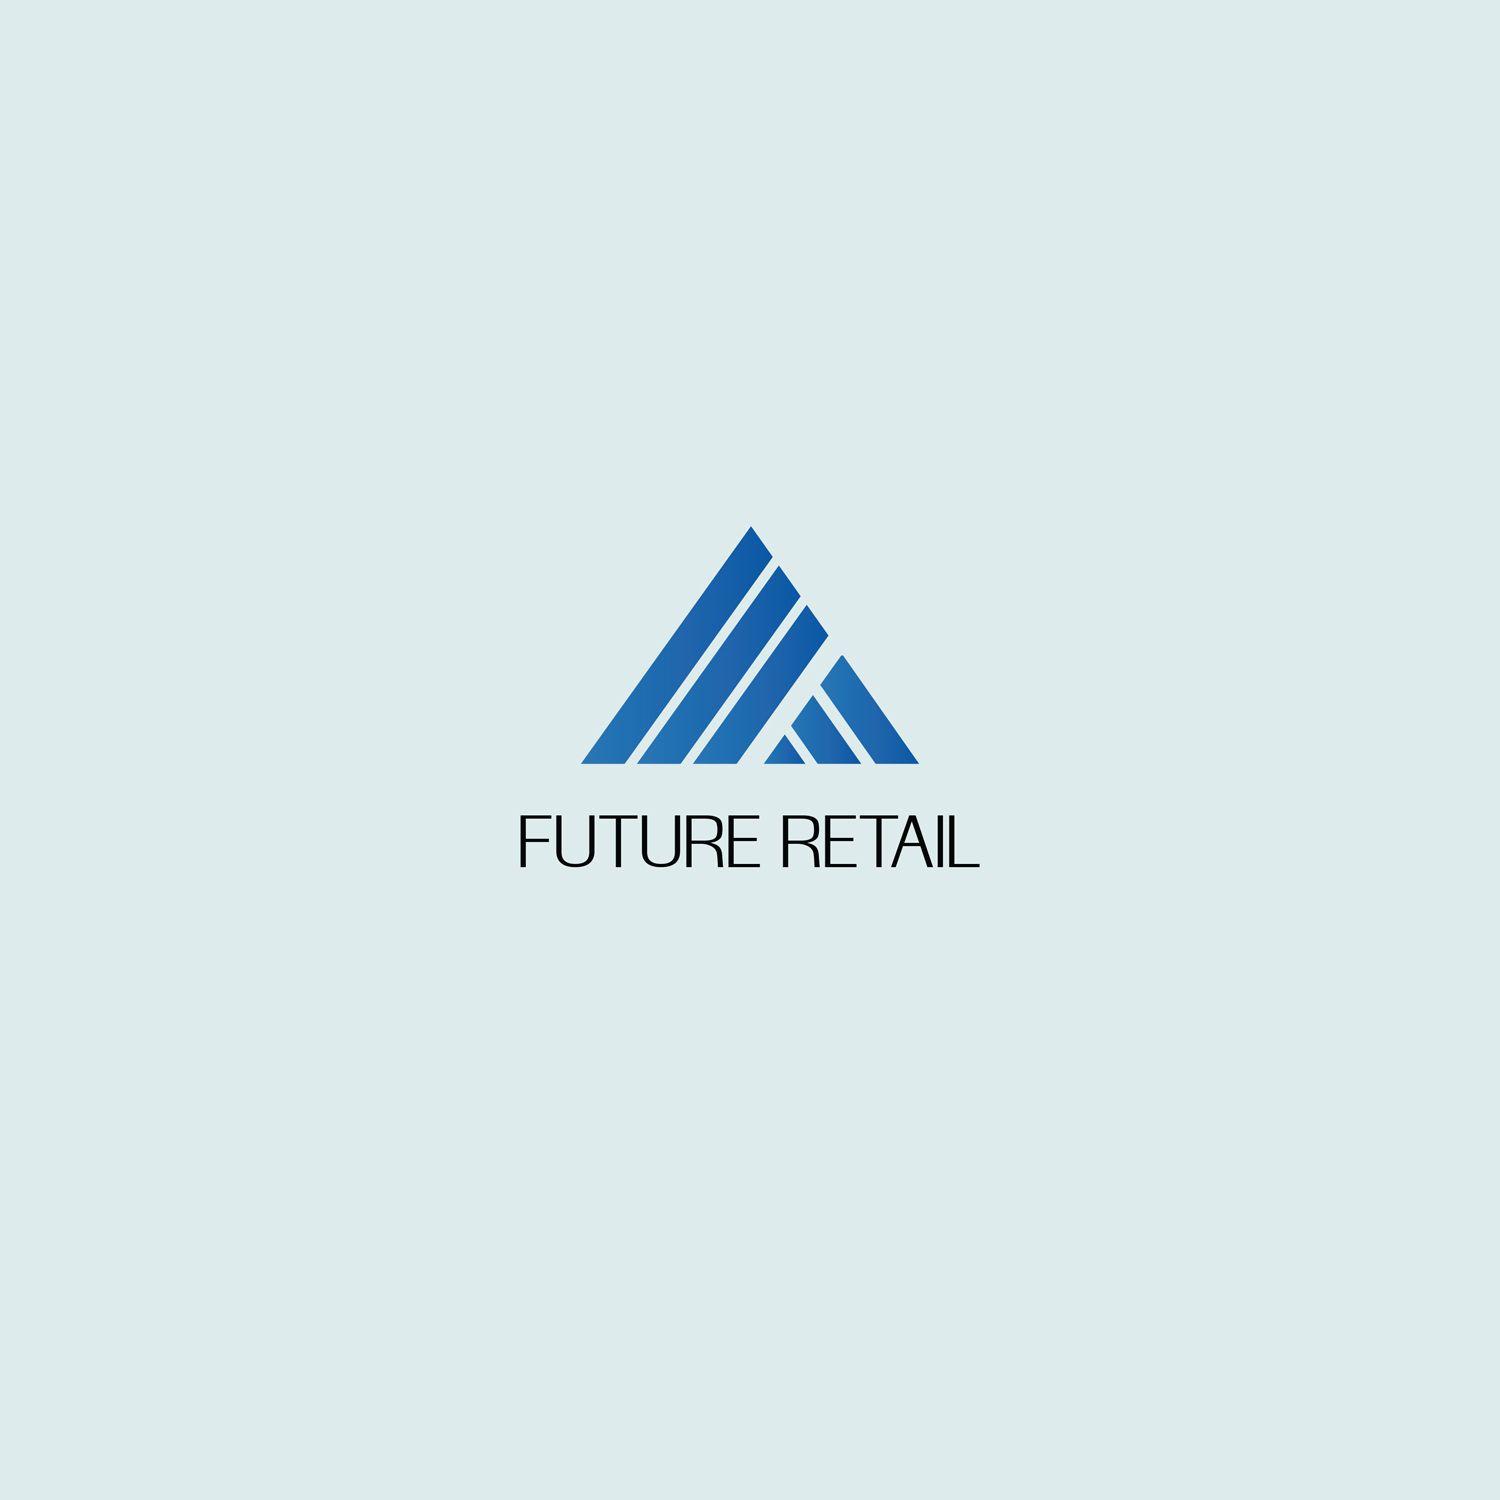 Consumer Logo - Elegant, Modern, Consumer Logo Design for Future Retail by ...